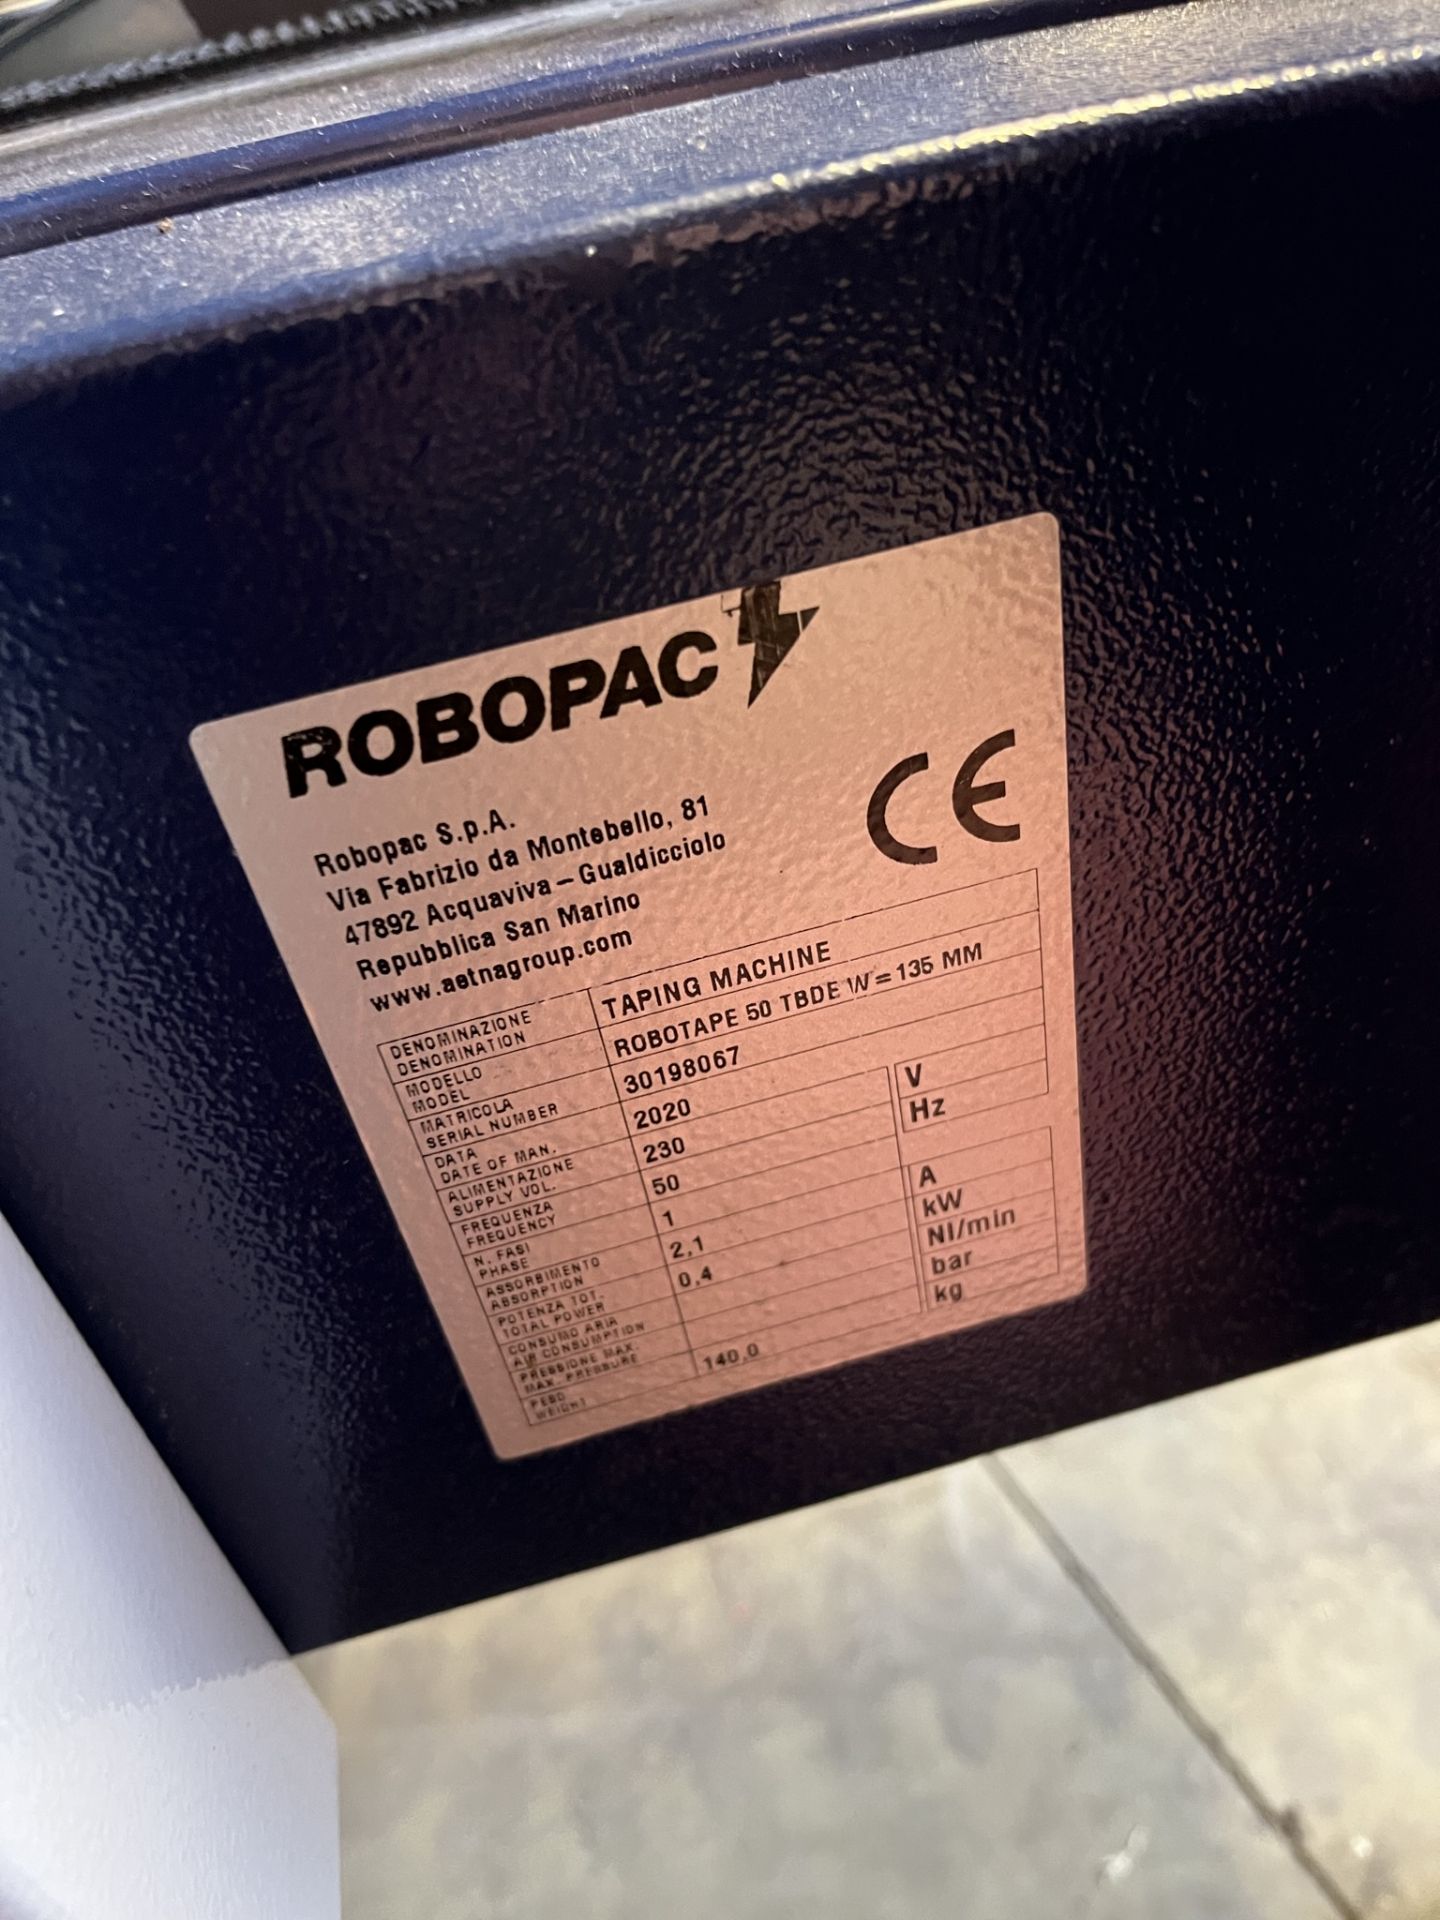 Robopac Robotape 50 TBDE Adjustable through feed taping machine - Image 2 of 3